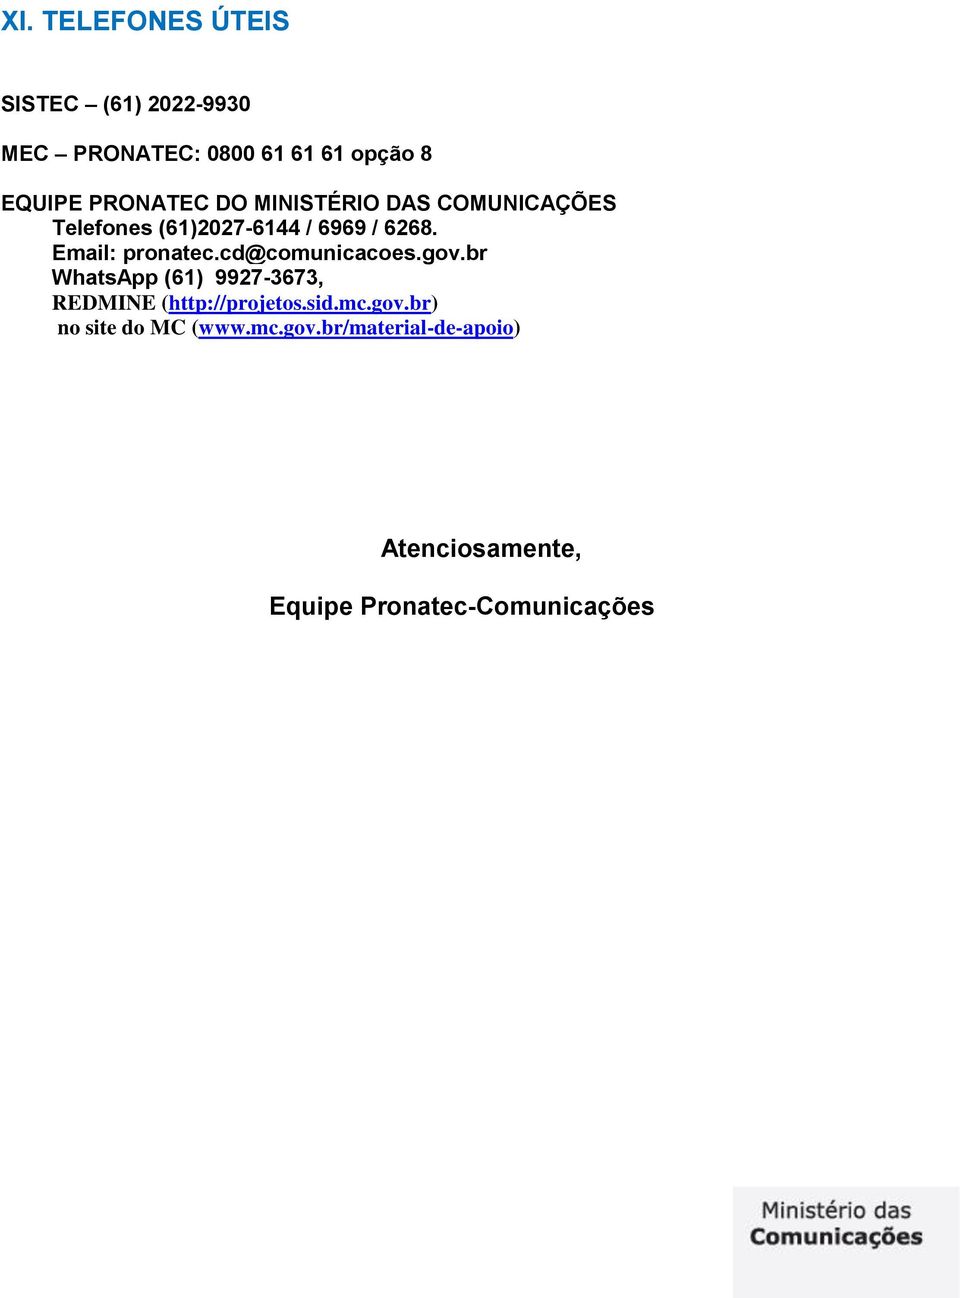 Email: pronatec.cd@comunicacoes.gov.br WhatsApp (61) 9927-3673, REDMINE (http://projetos.